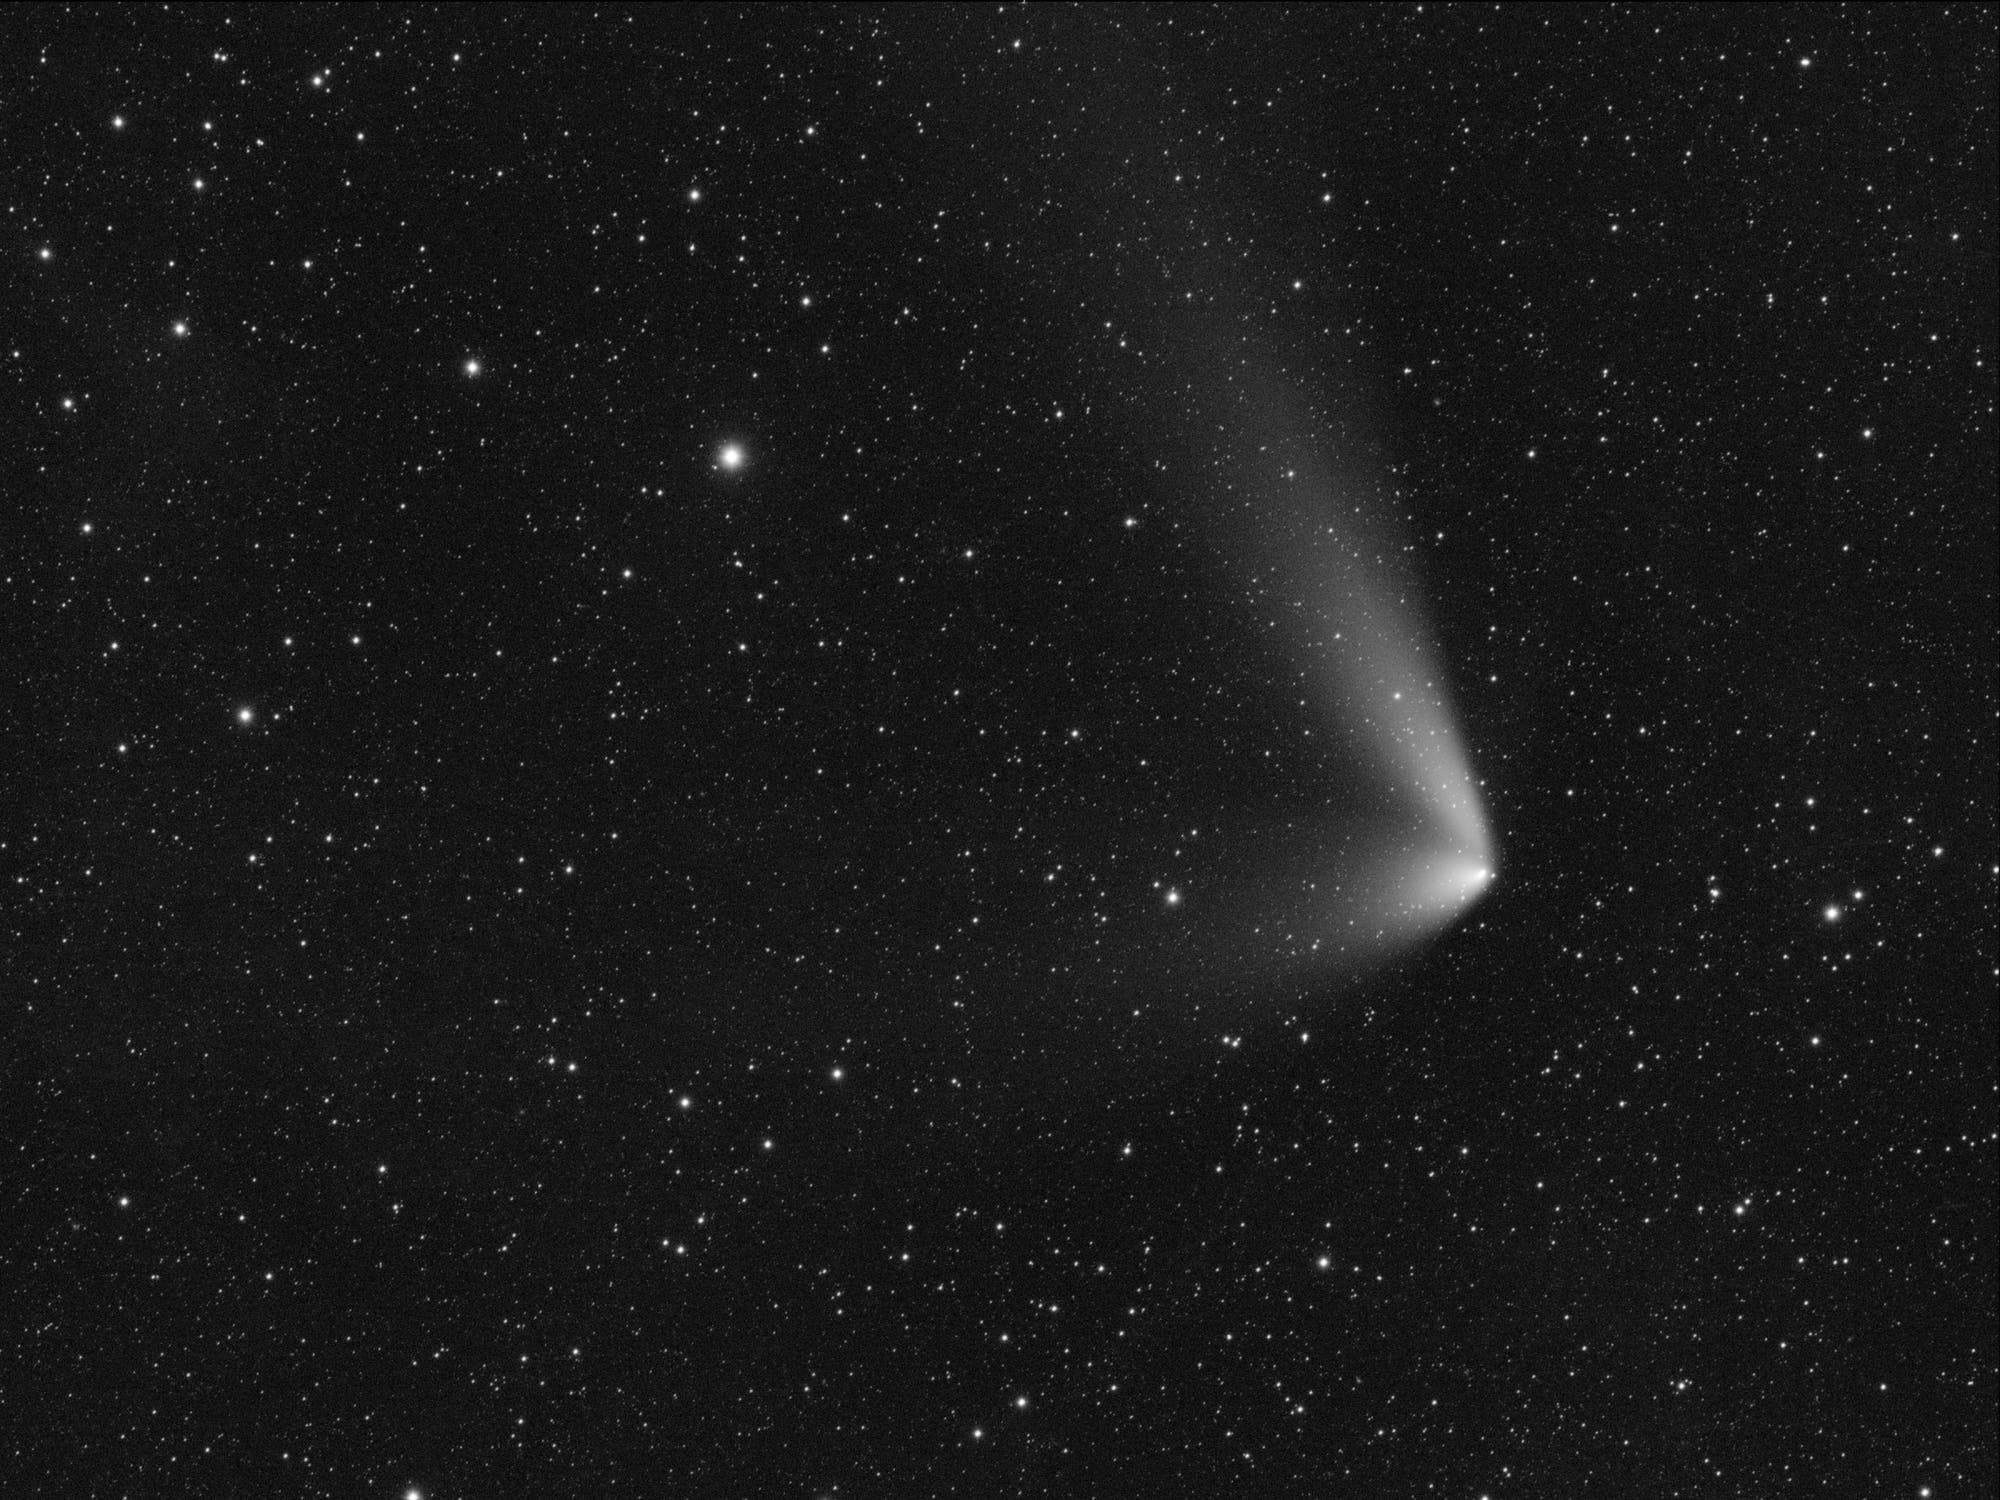 Comet C/2014 Q1 PANSTARRS